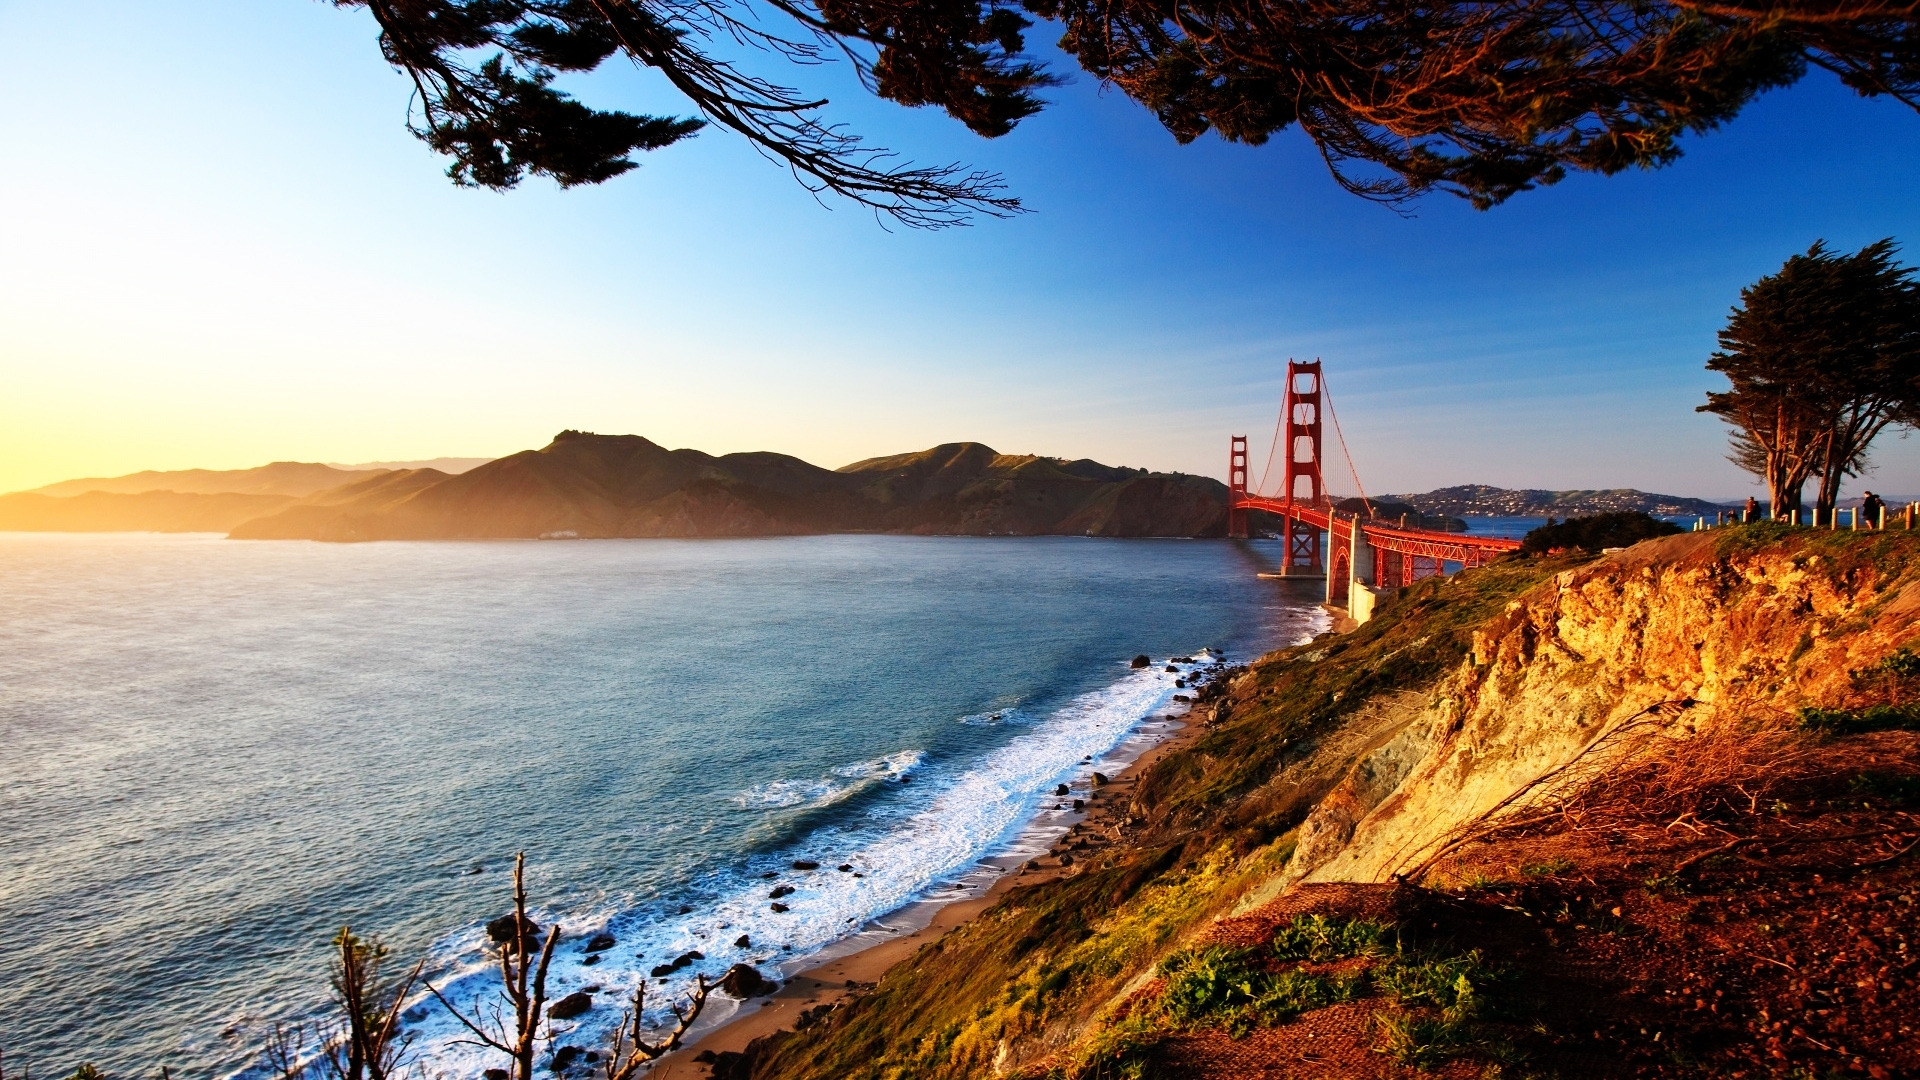 San Francisco Bridge View for 1920 x 1080 HDTV 1080p resolution